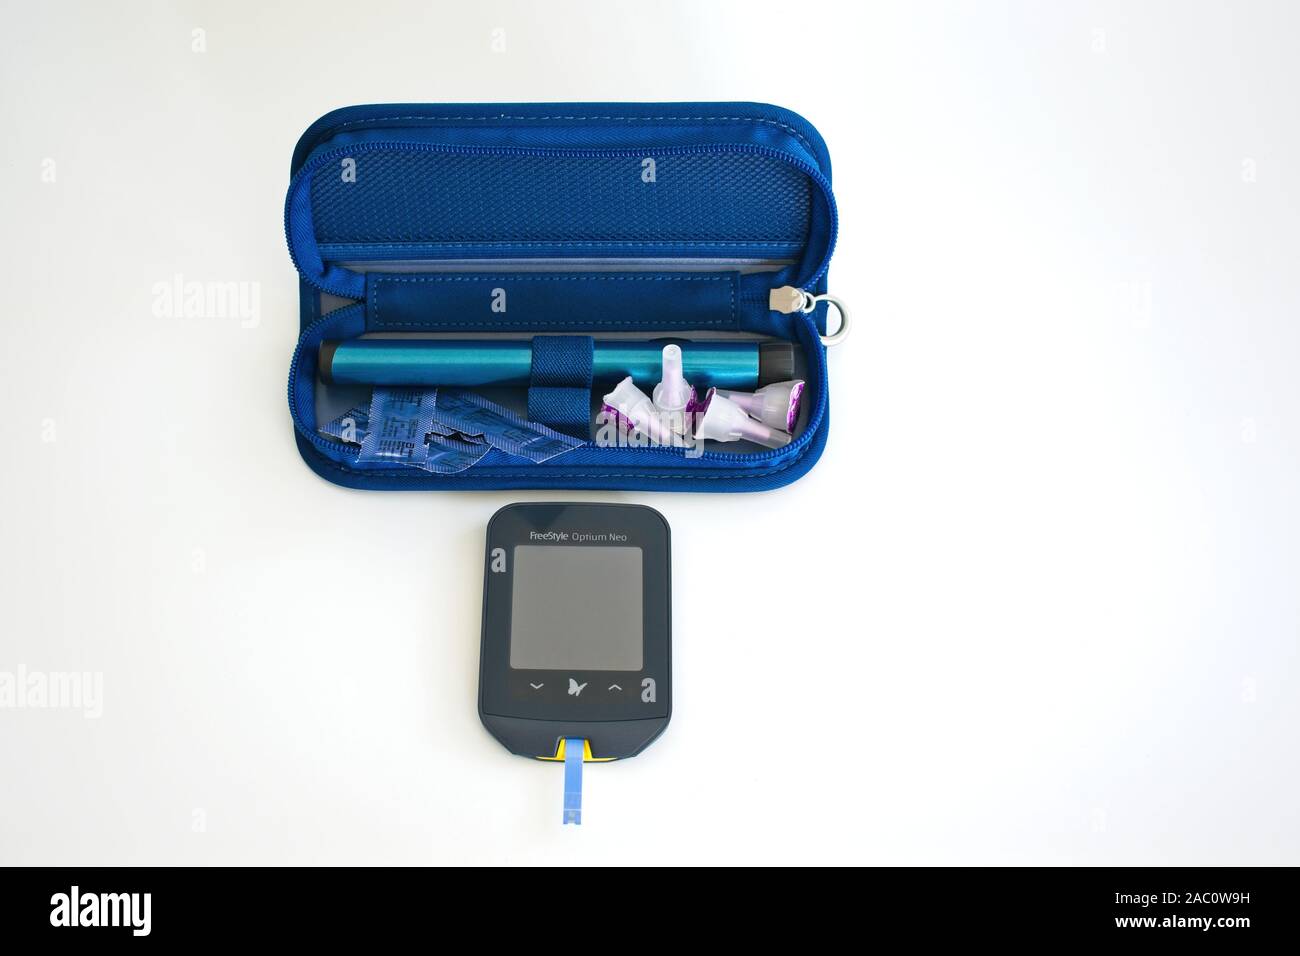 Diabetes test kit and insulin pen. Stock Photo